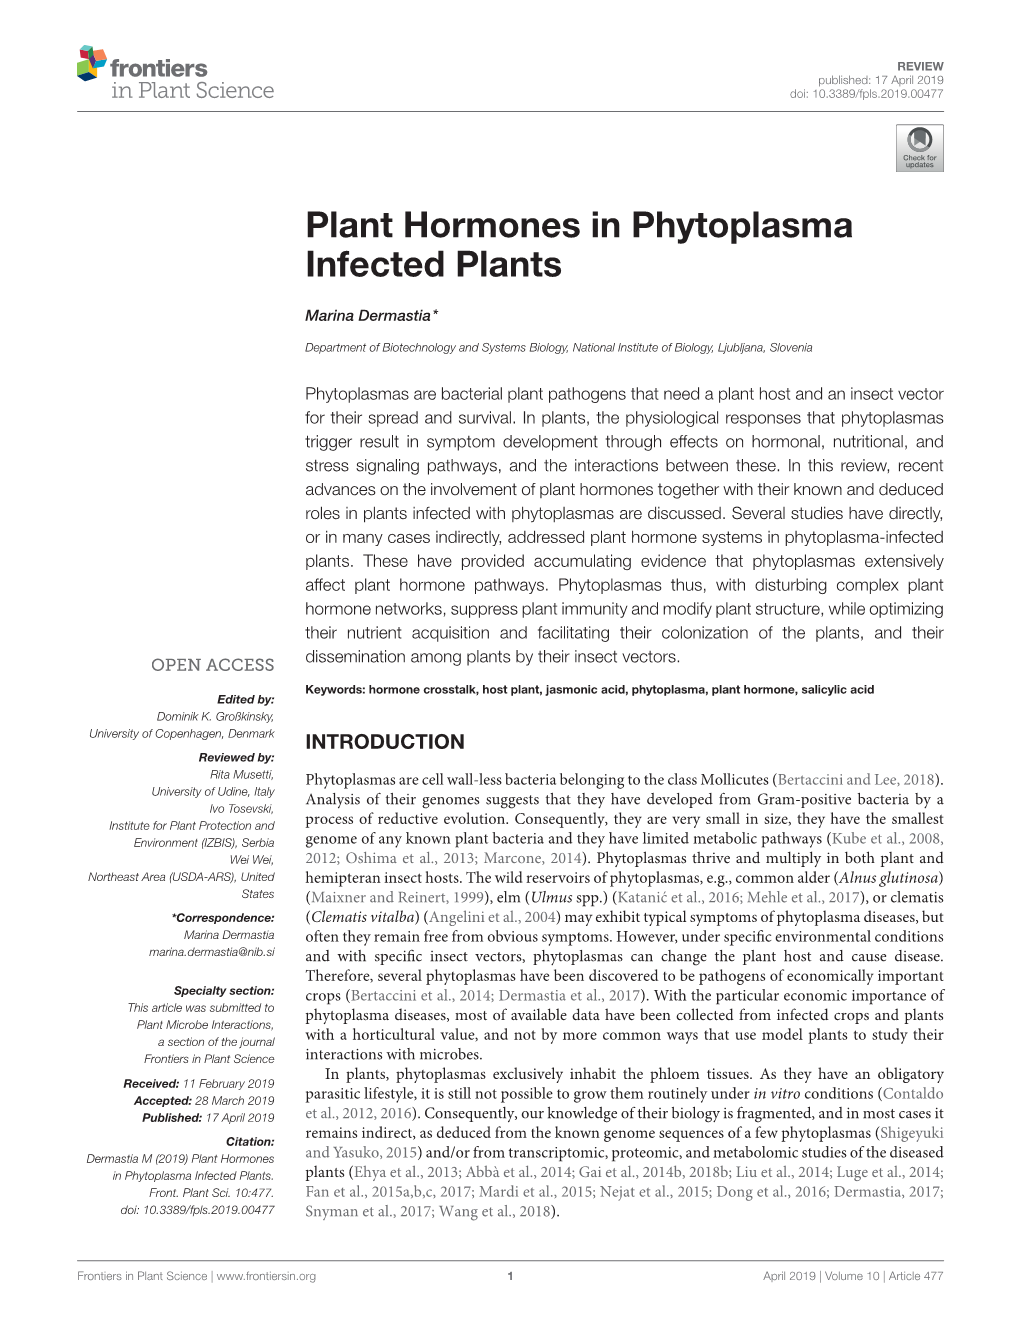 Plant Hormones in Phytoplasma Infected Plants